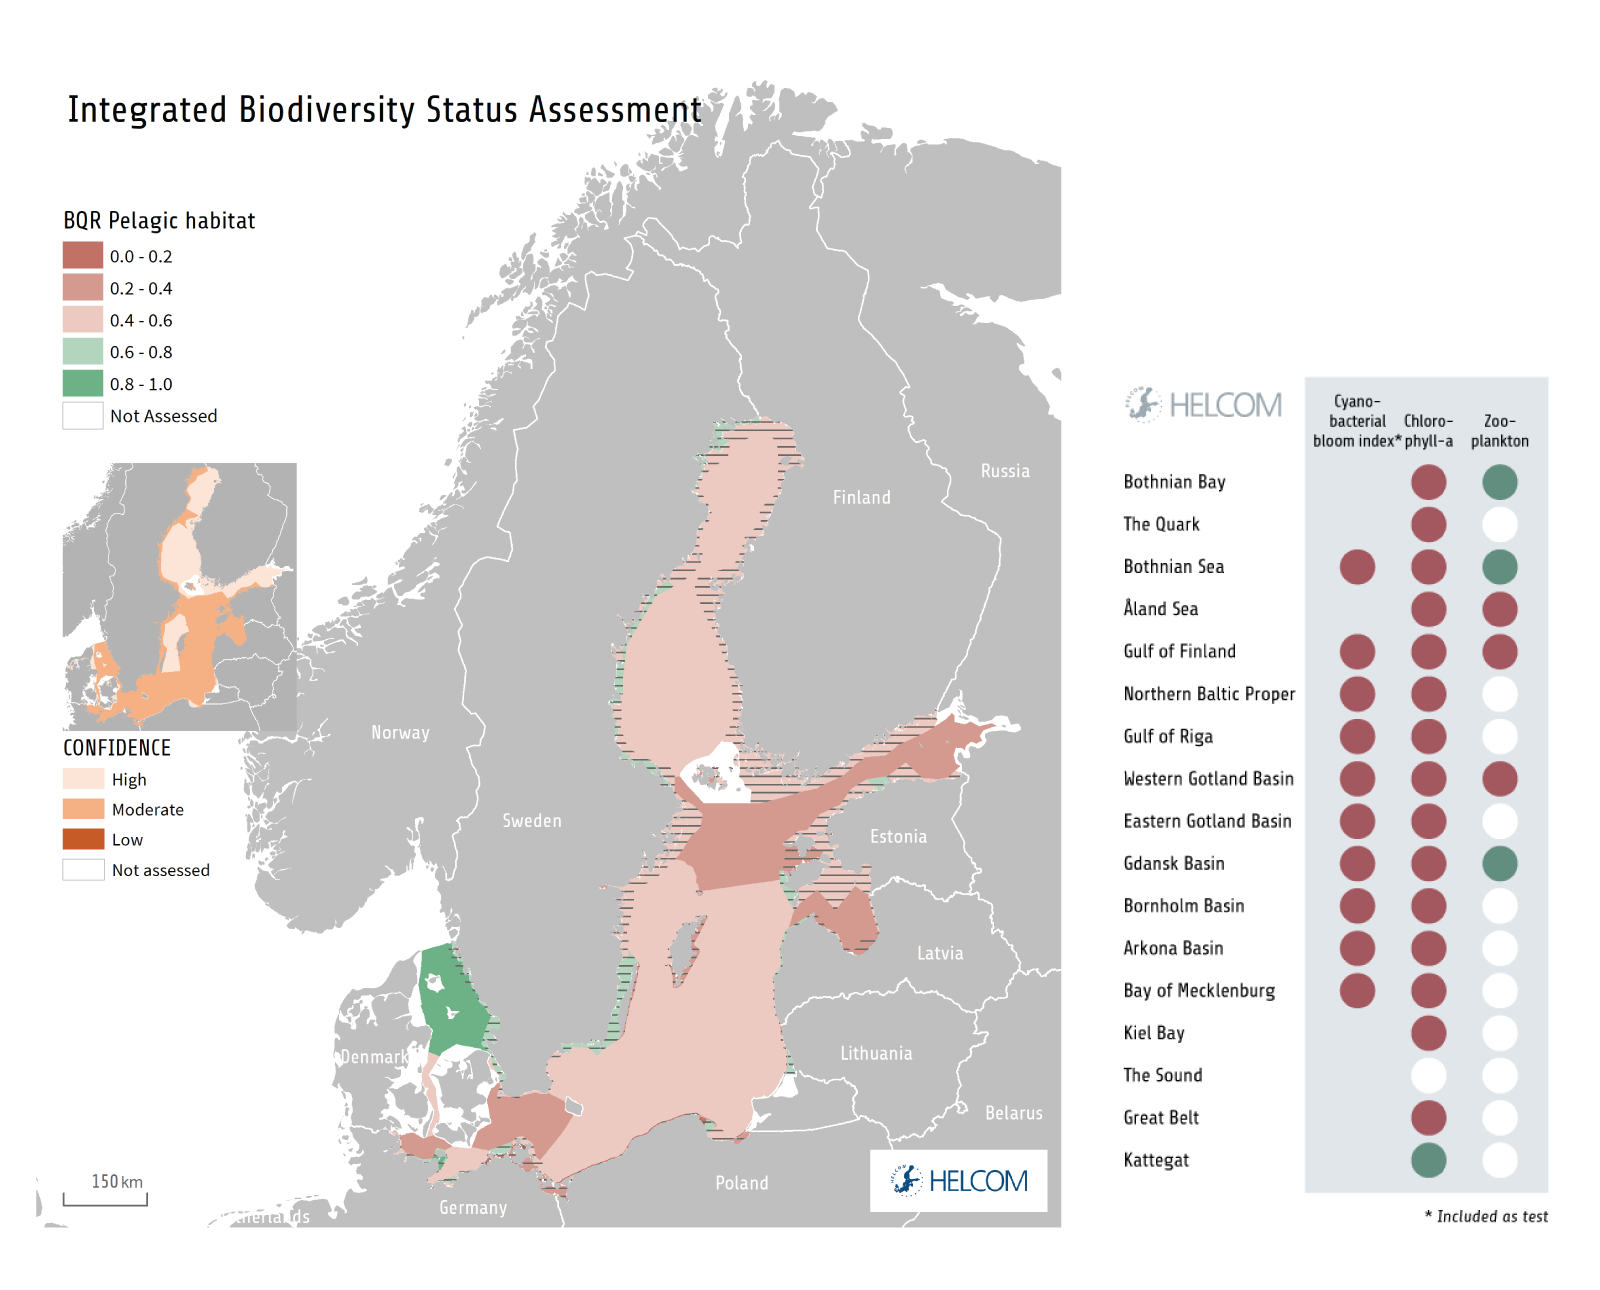 HELCOM HOLASII Fig 5.2.1 Integrated Biodiversity Status Assessment For Pelagic Habitats